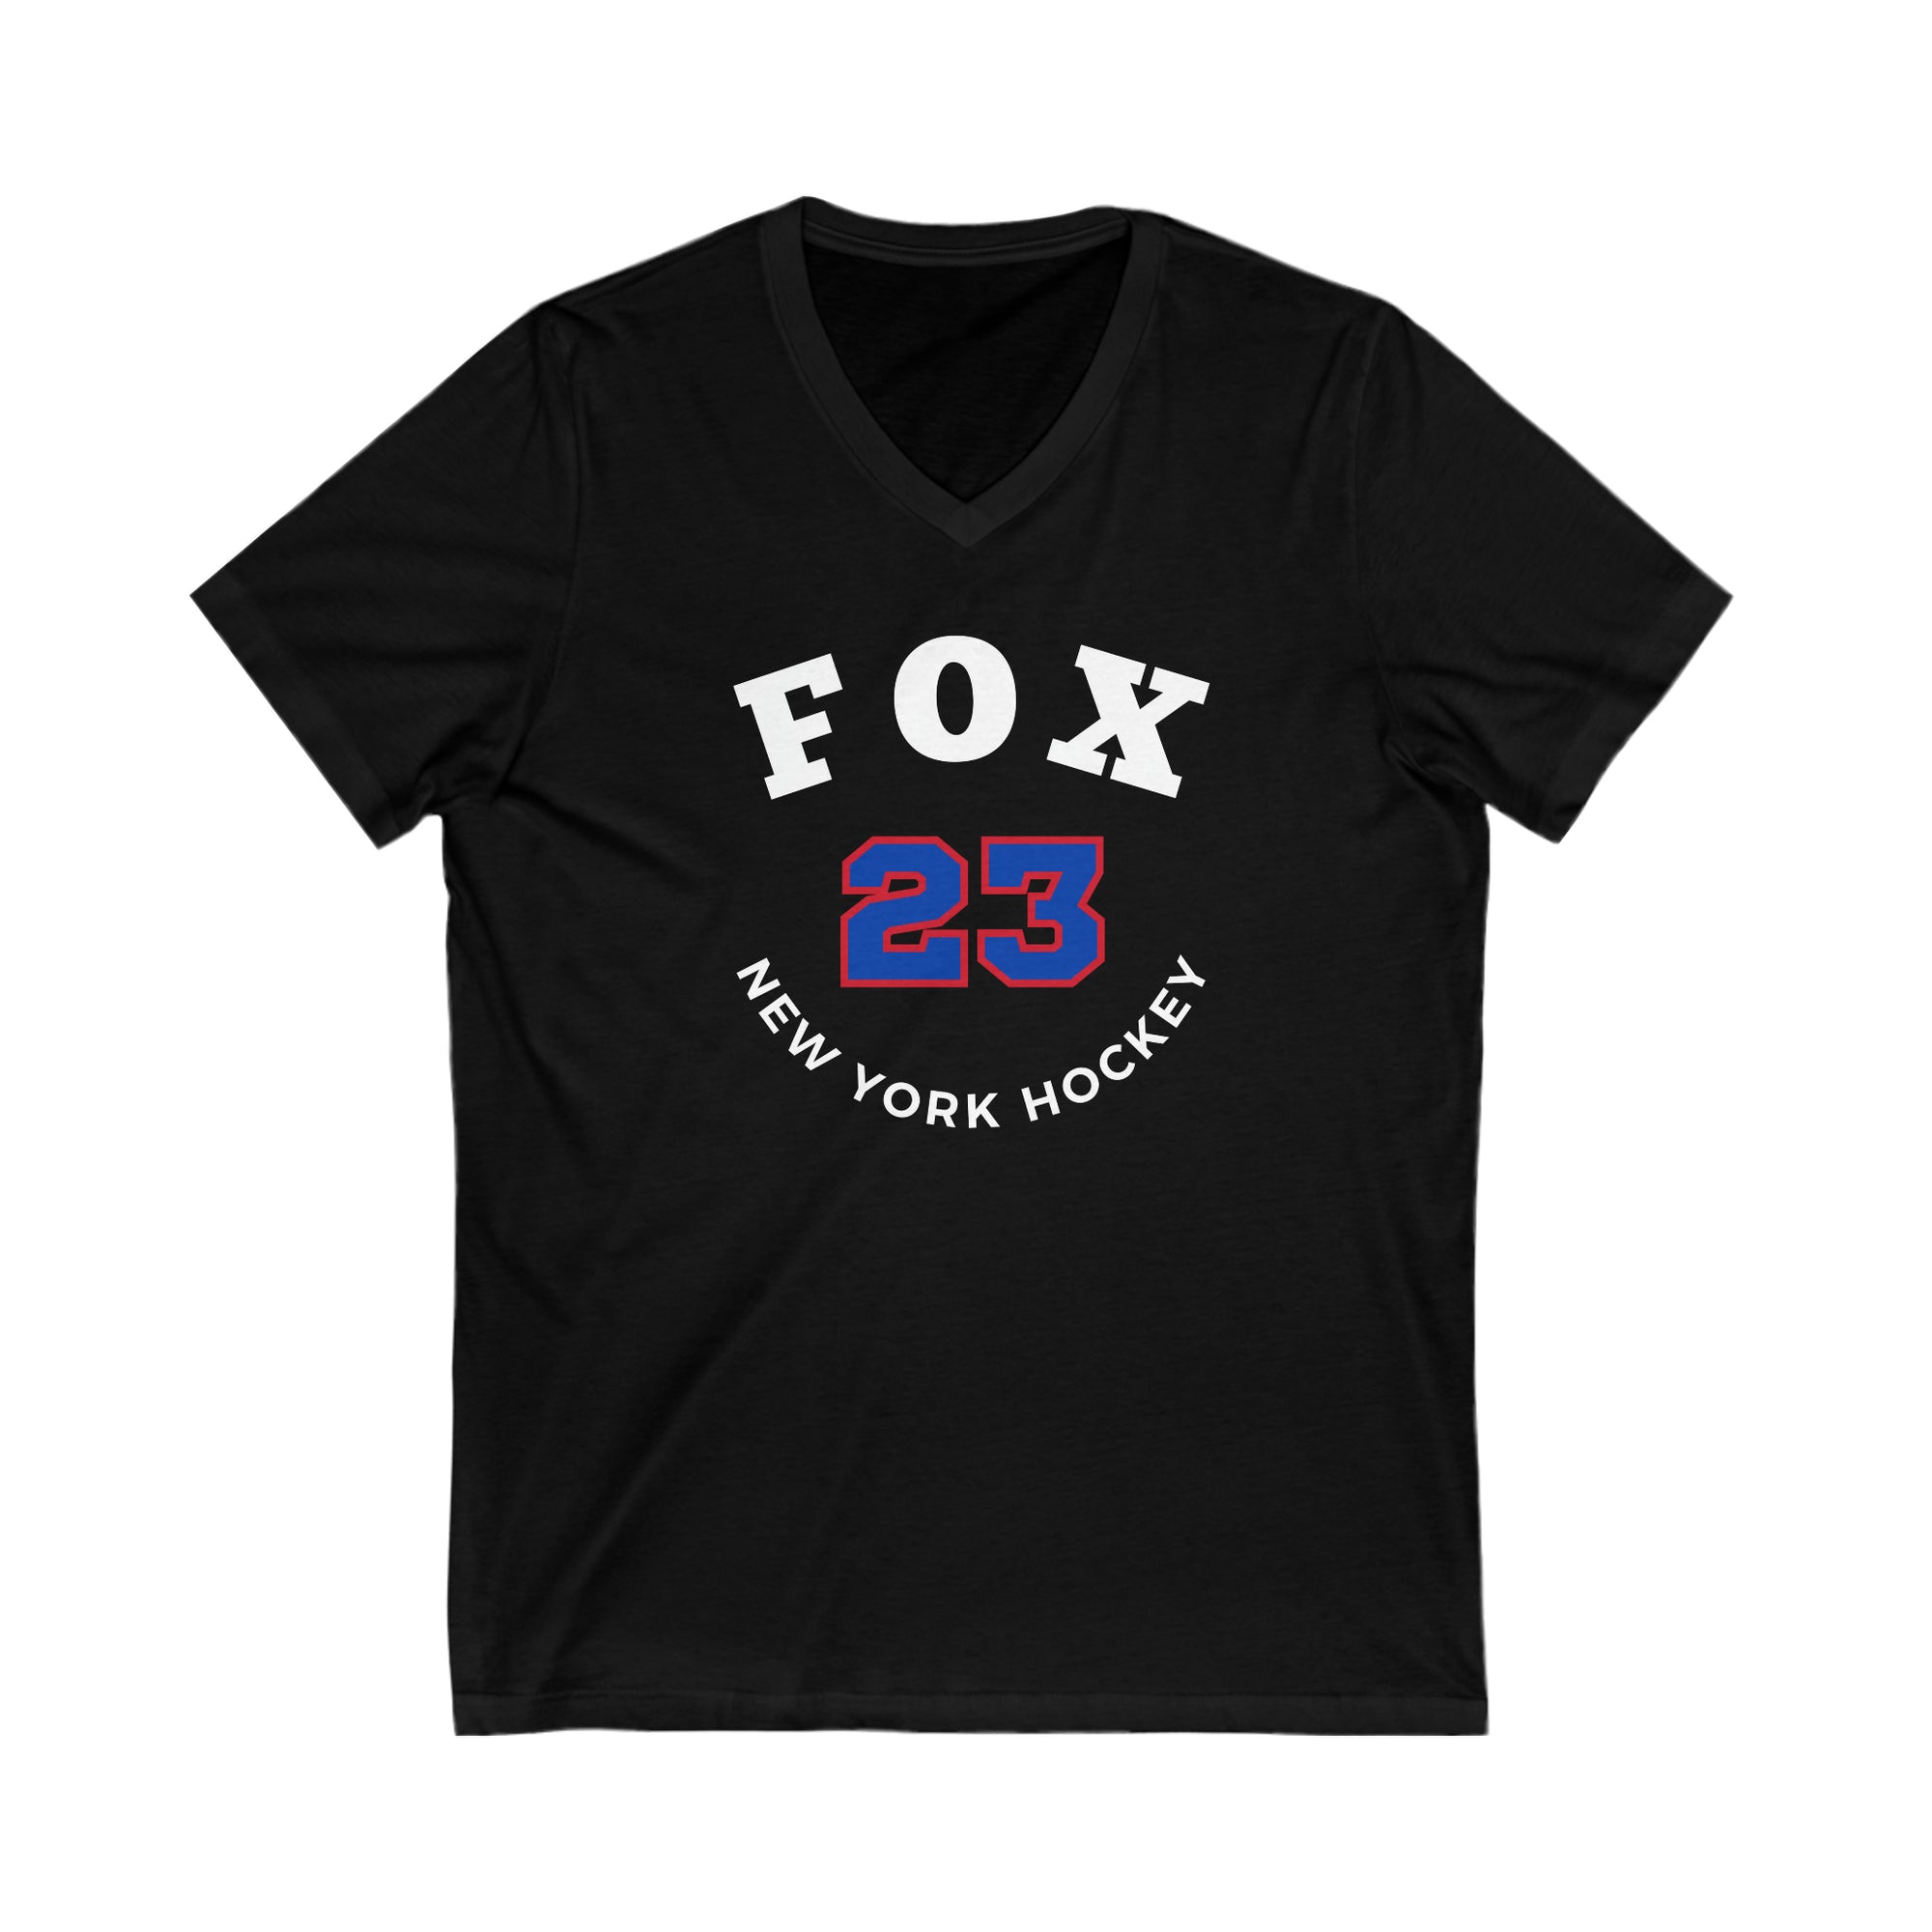 Fox 23 New York Hockey Number Arch Design Unisex V-Neck Tee